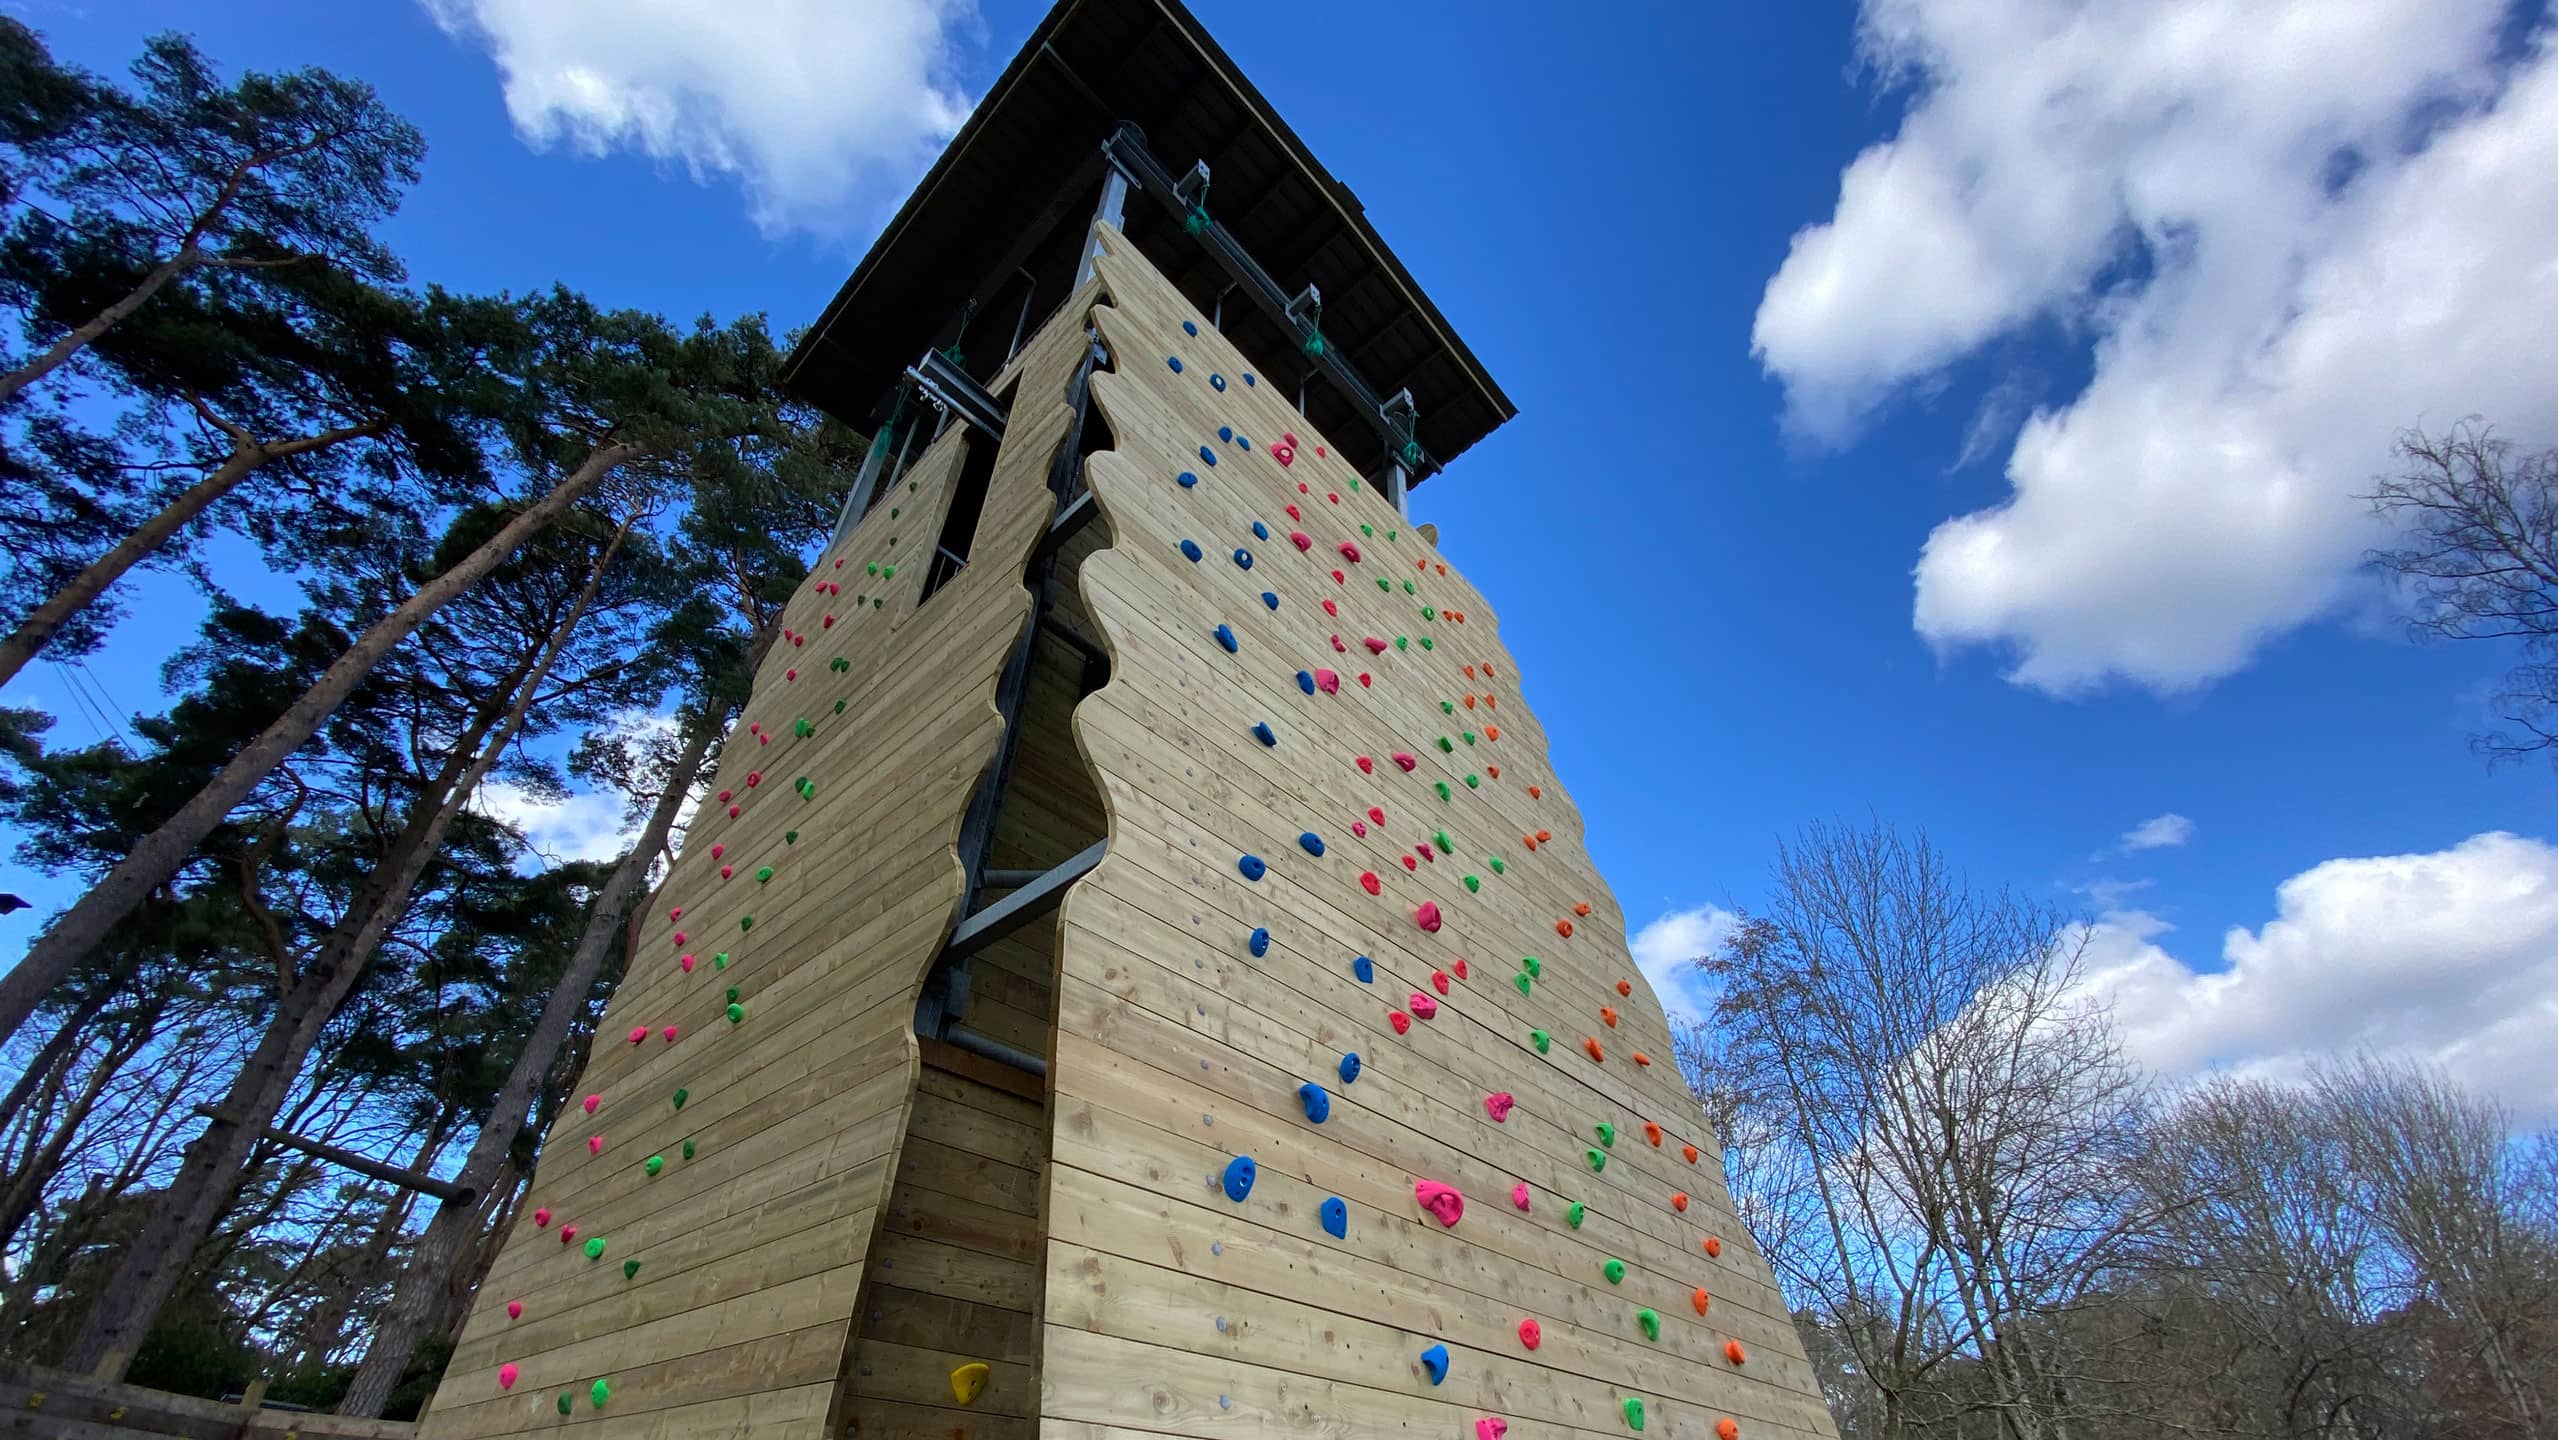 JM Adventure climbing towers design and build